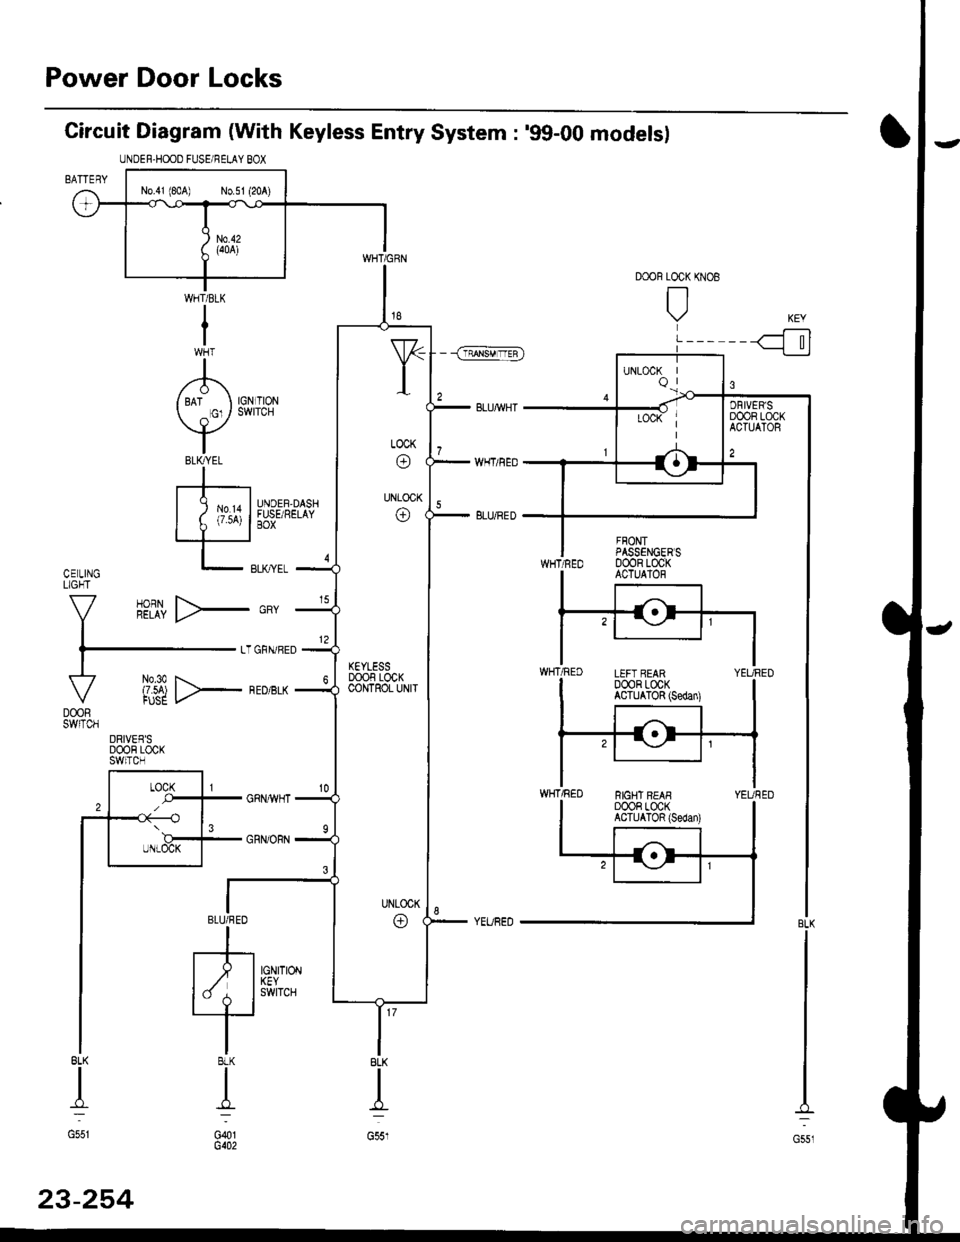 HONDA CIVIC 1996 6.G Workshop Manual Power Door Locks
Circuit Diagram (With Keyless Entry System : 99-00 models)
BL(
I
G551
UNDEF.HOOO FUSE/RELAY BOX
N0.41 1804) N0.51 (20 )
KEYLESSDOOF LOCKCOIJTROL UNIT
DRIVEFSDOOF LOCKSWITCH
23-254 